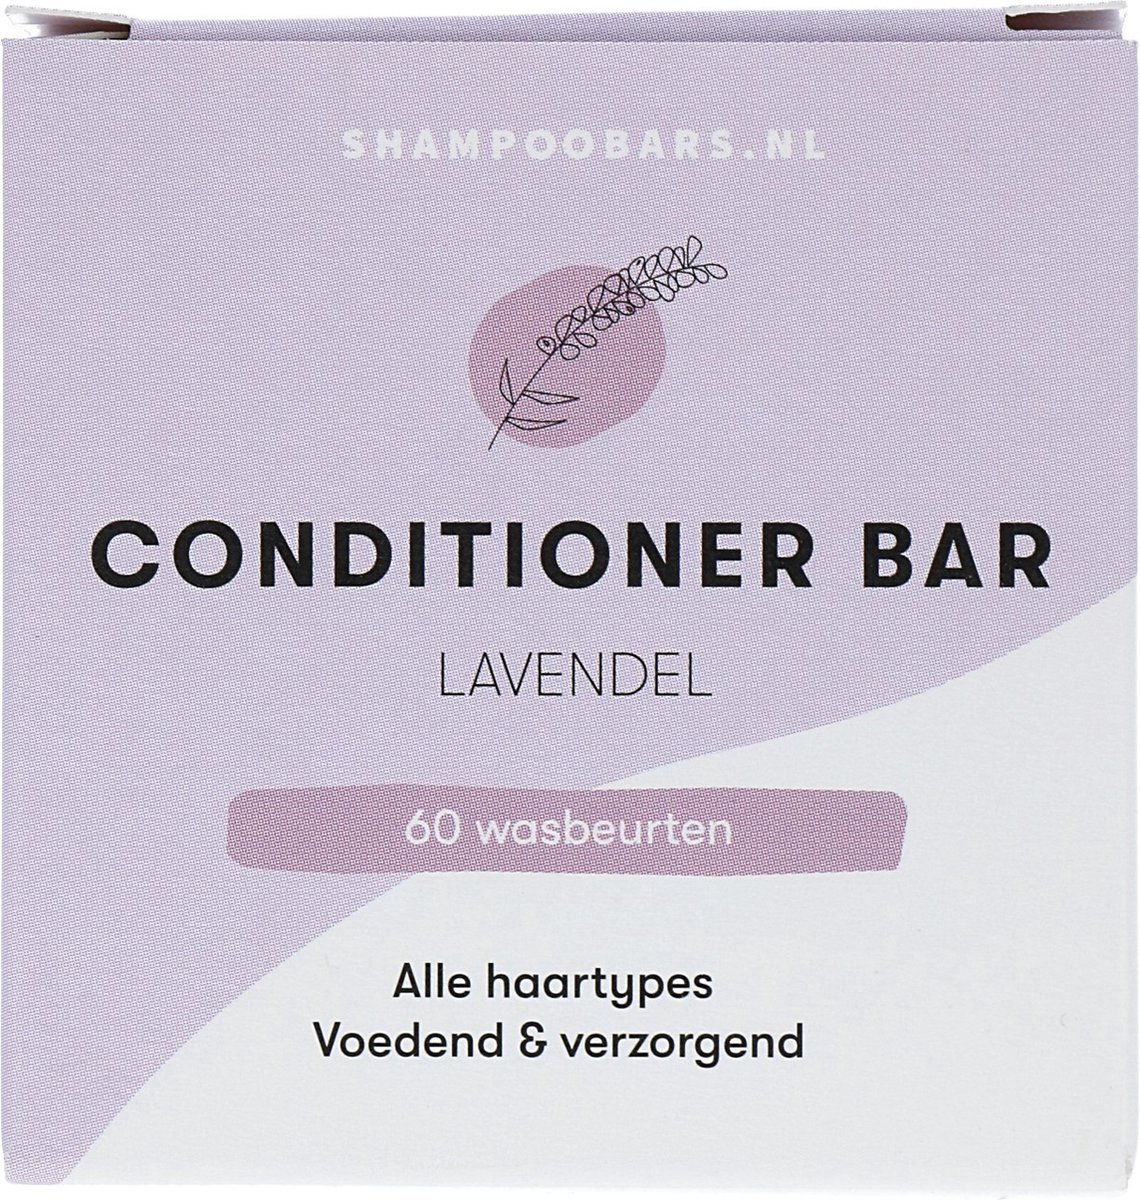 Conditioner Bar Lavendel | Handgemaakt in Nederland | Plasticvrij | 100% biologisch afbreekbare verpakking